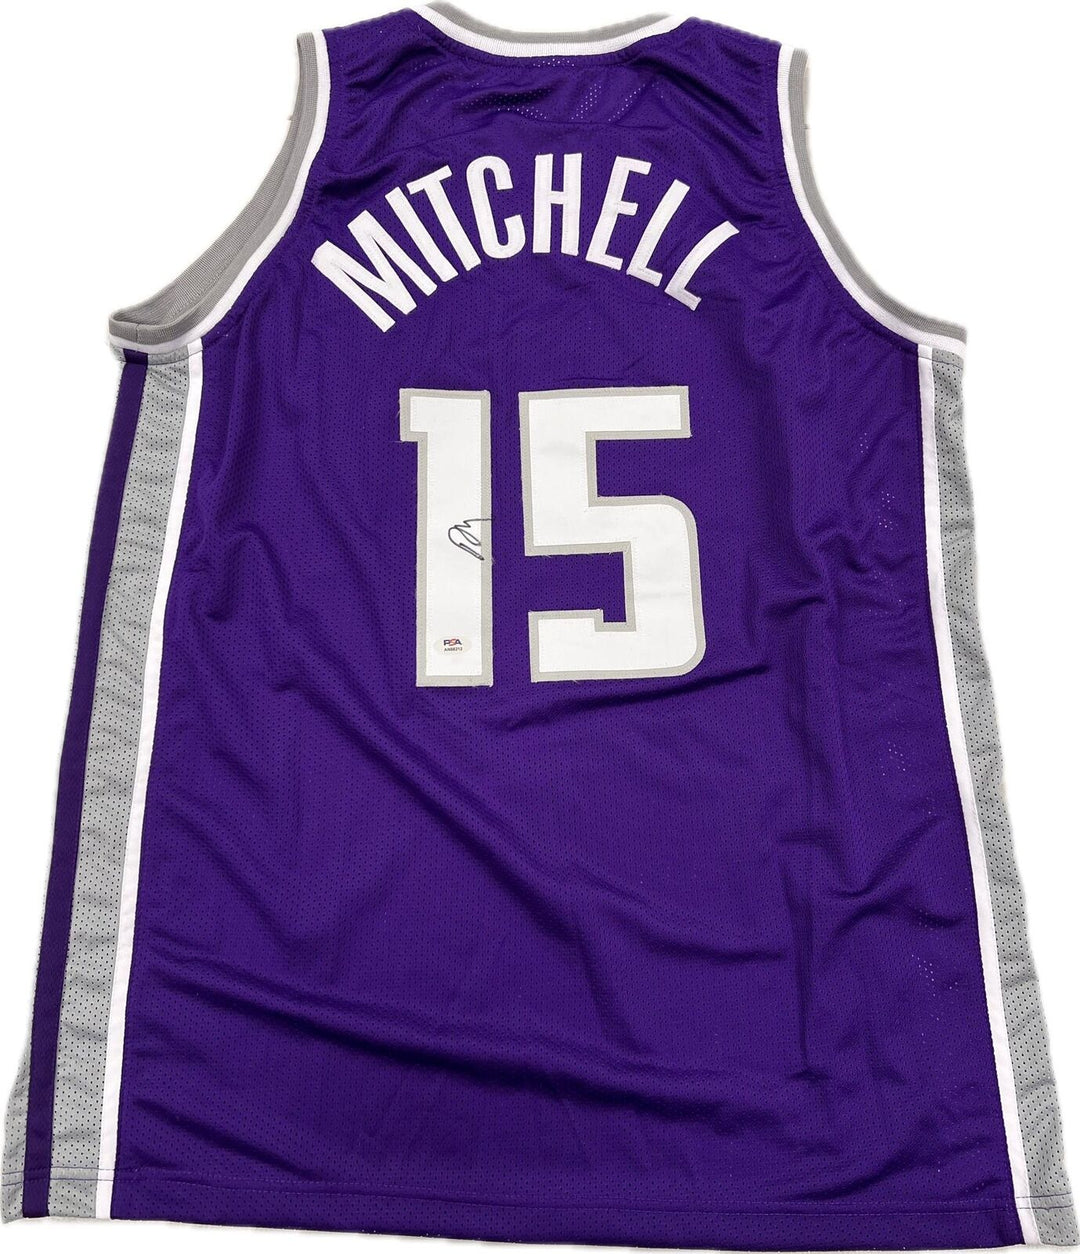 Davion Mitchell signed jersey PSA/DNA Sacramento Kings Autographed Image 1